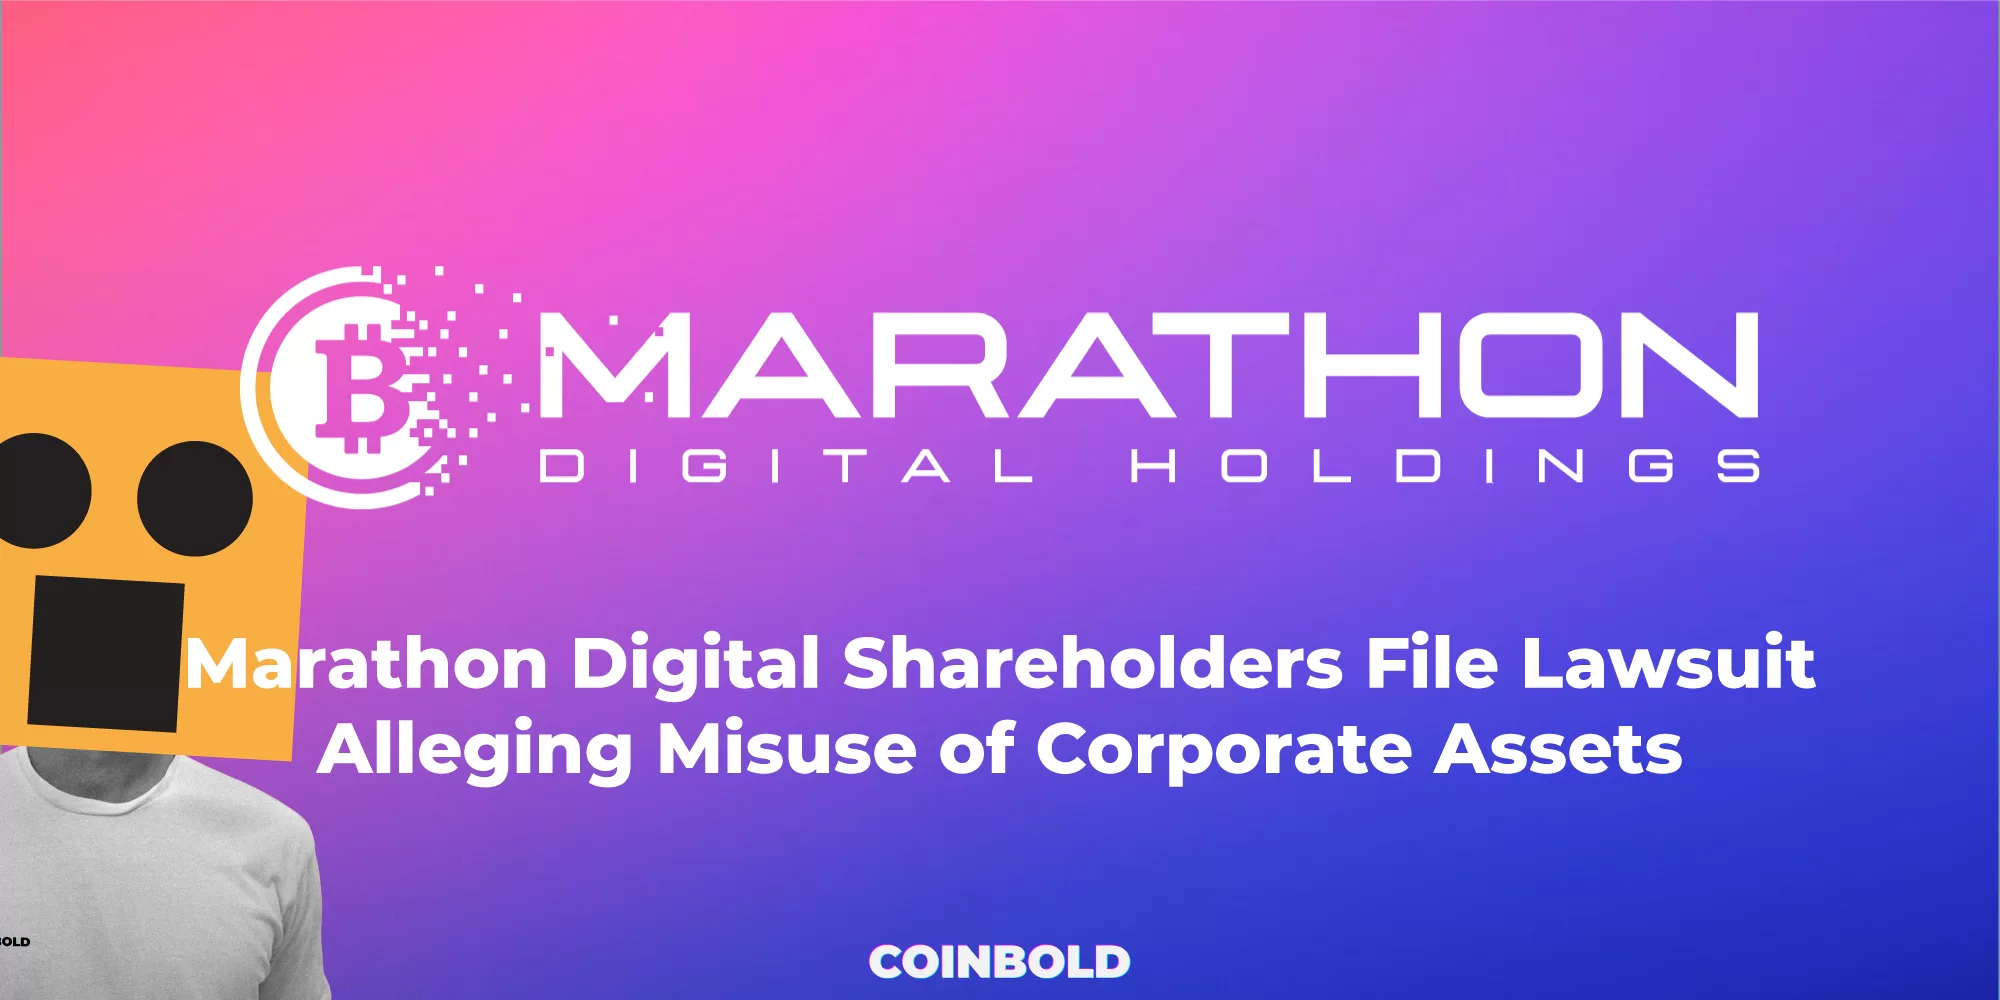 Marathon Digital Shareholders File Lawsuit Alleging Misuse of Corporate Assets